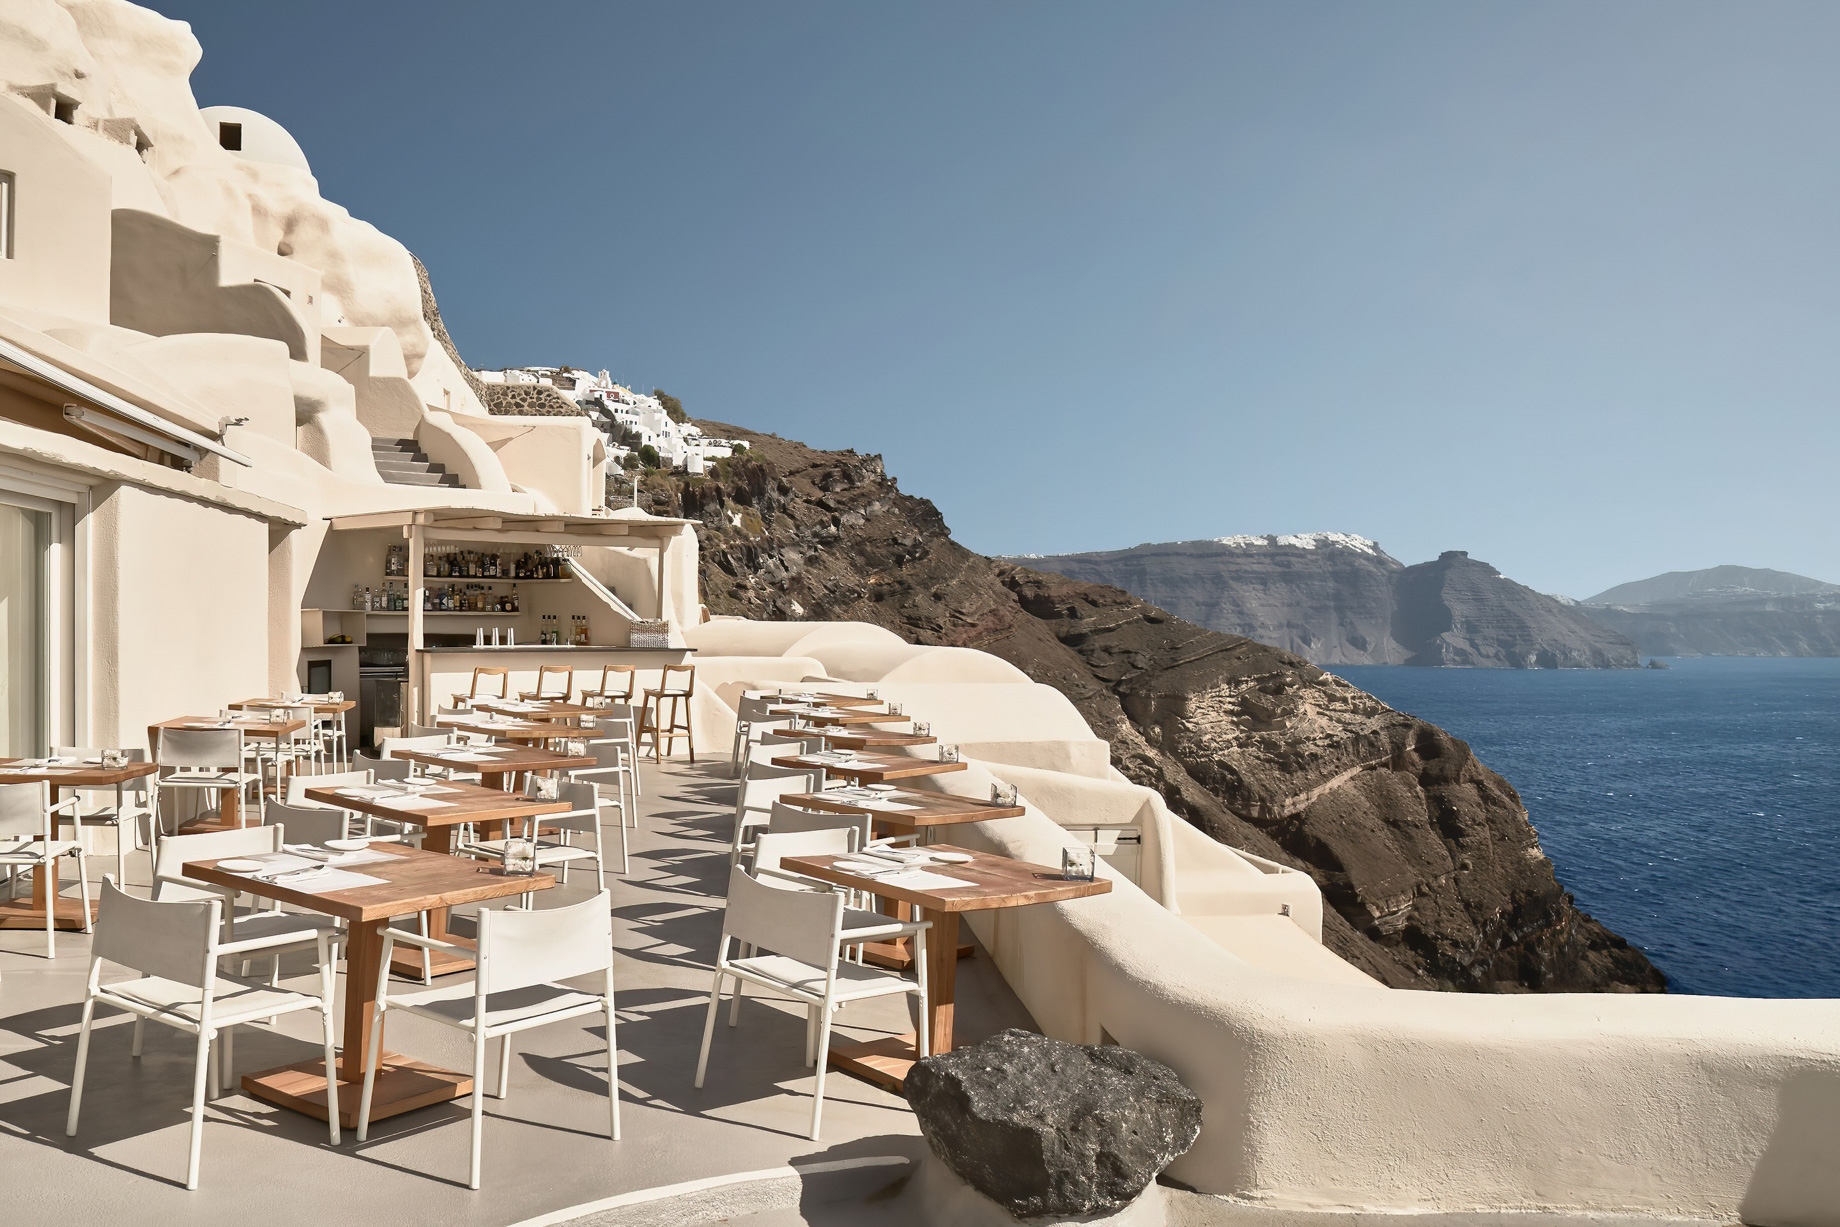 Mystique Hotel Santorini – Oia, Santorini Island, Greece – Clifftop Hotel Charisma Restaurant